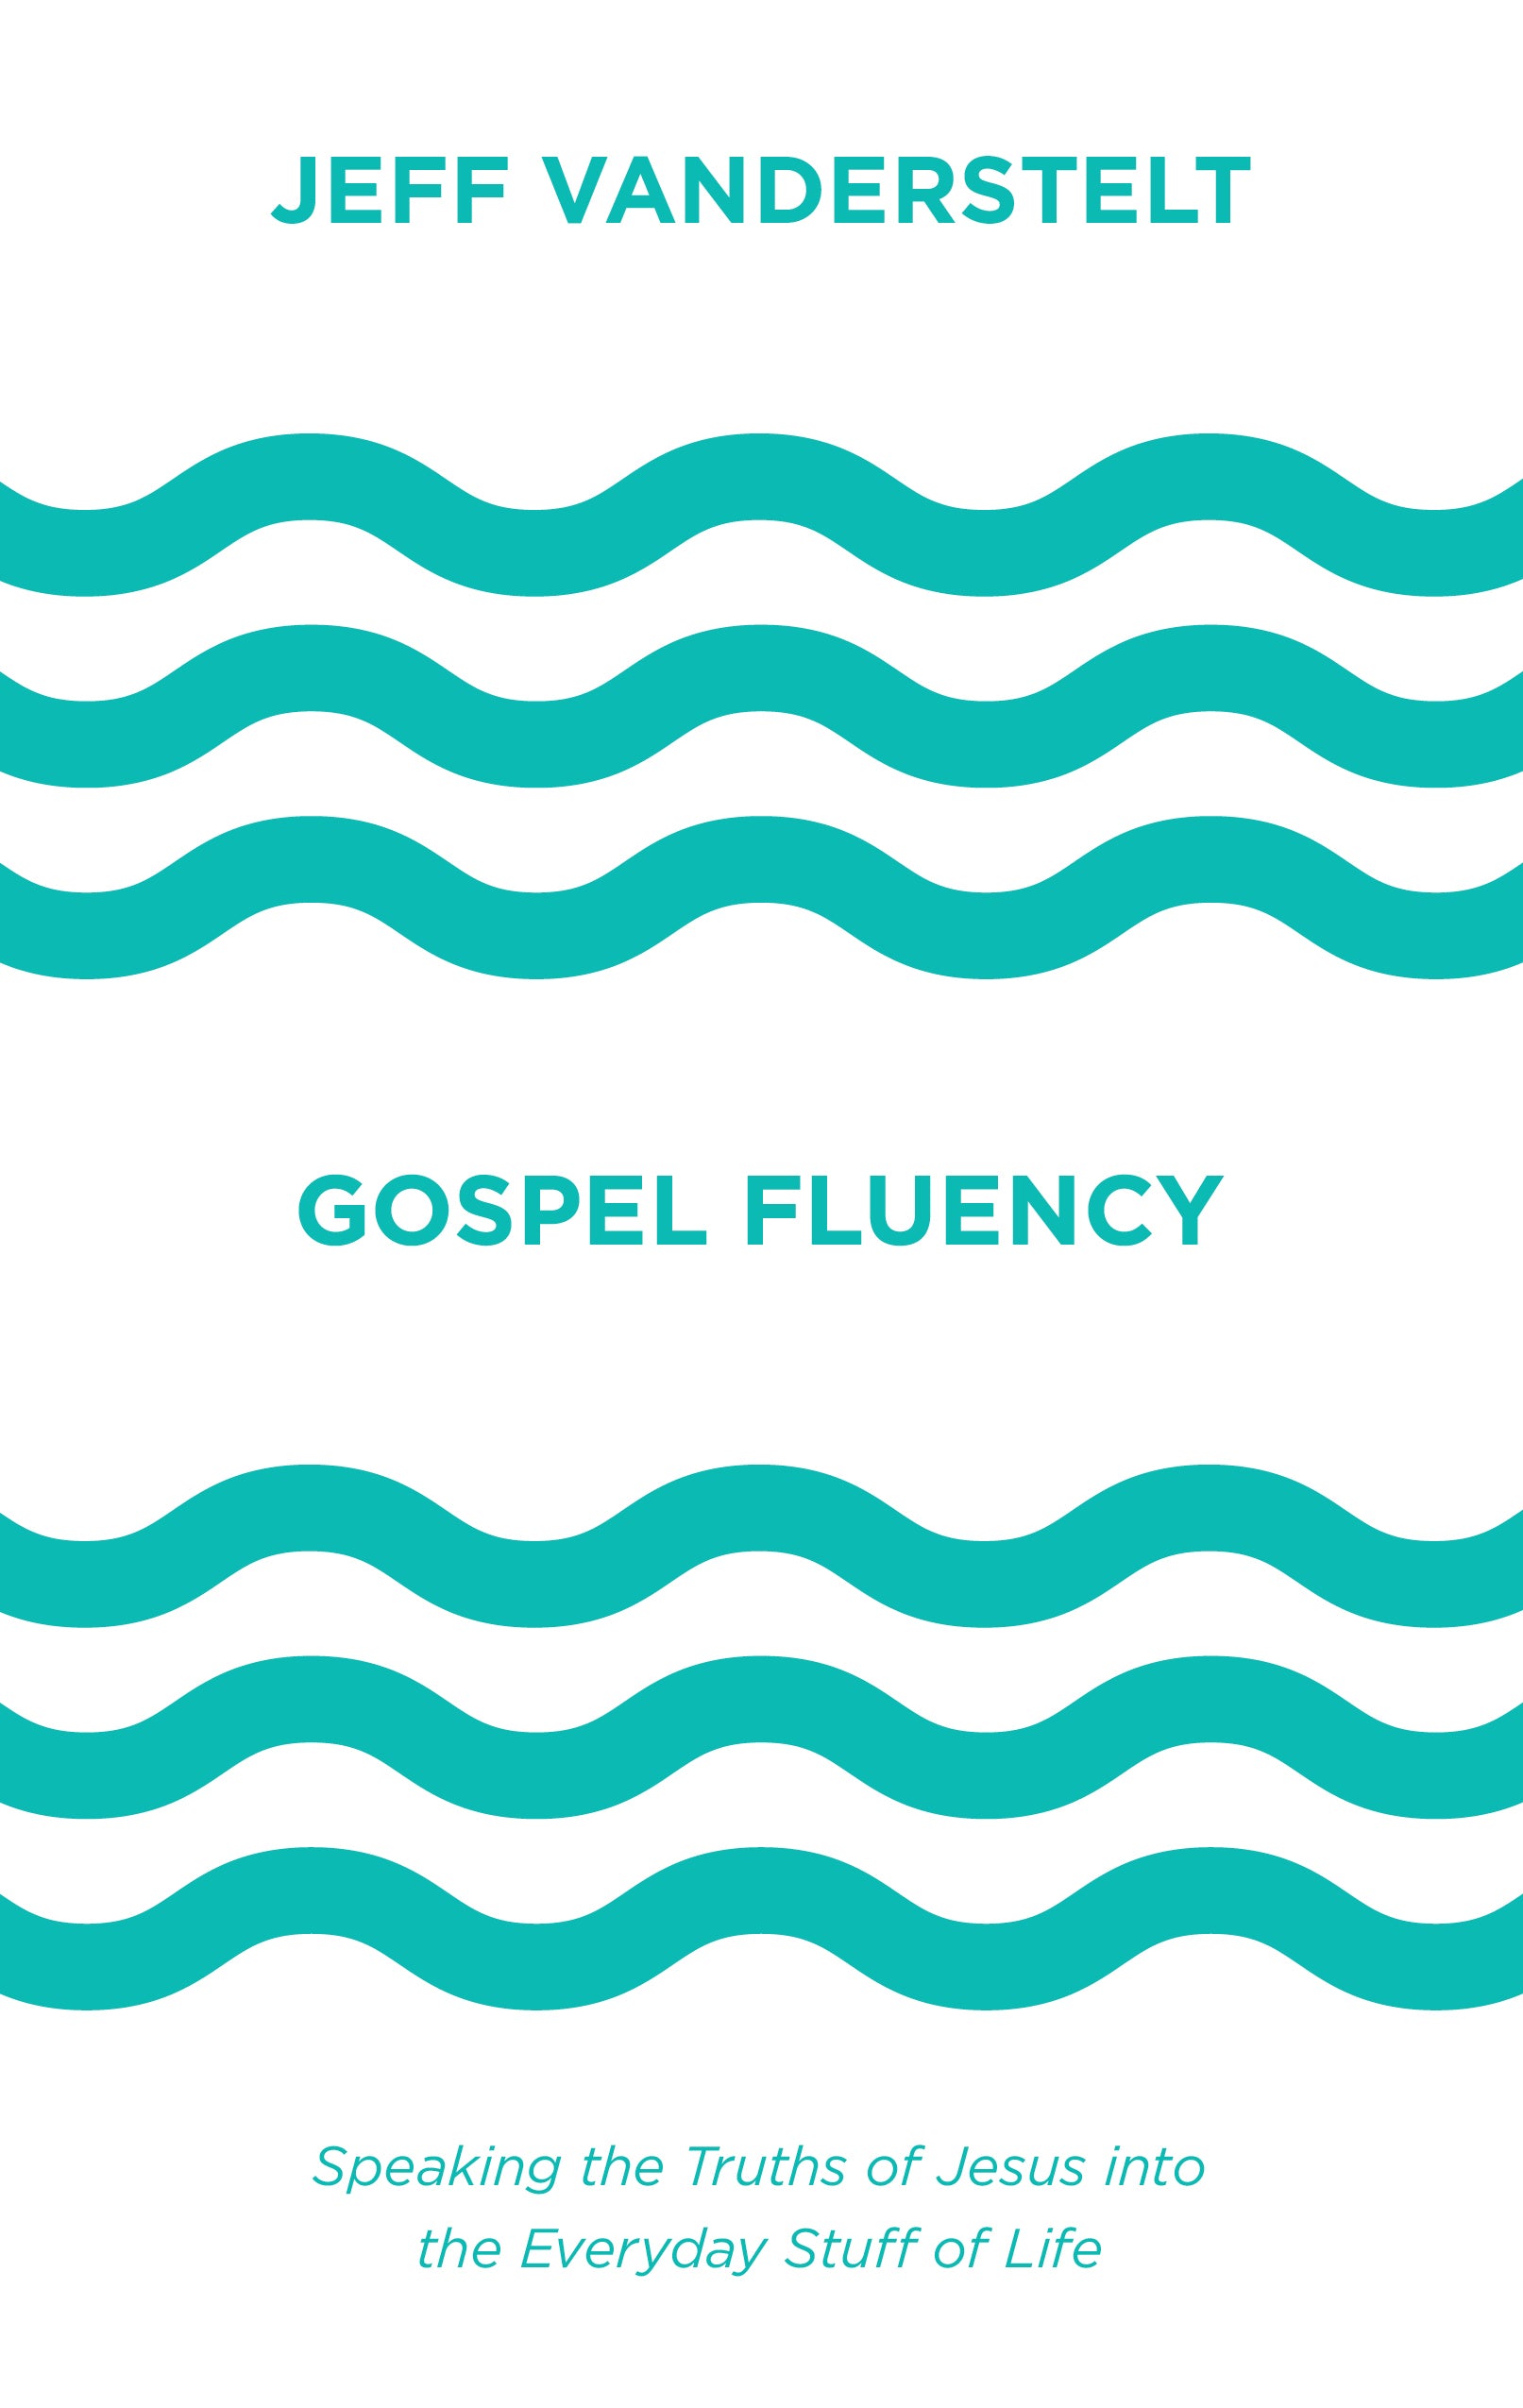 Image of Gospel Fluency other